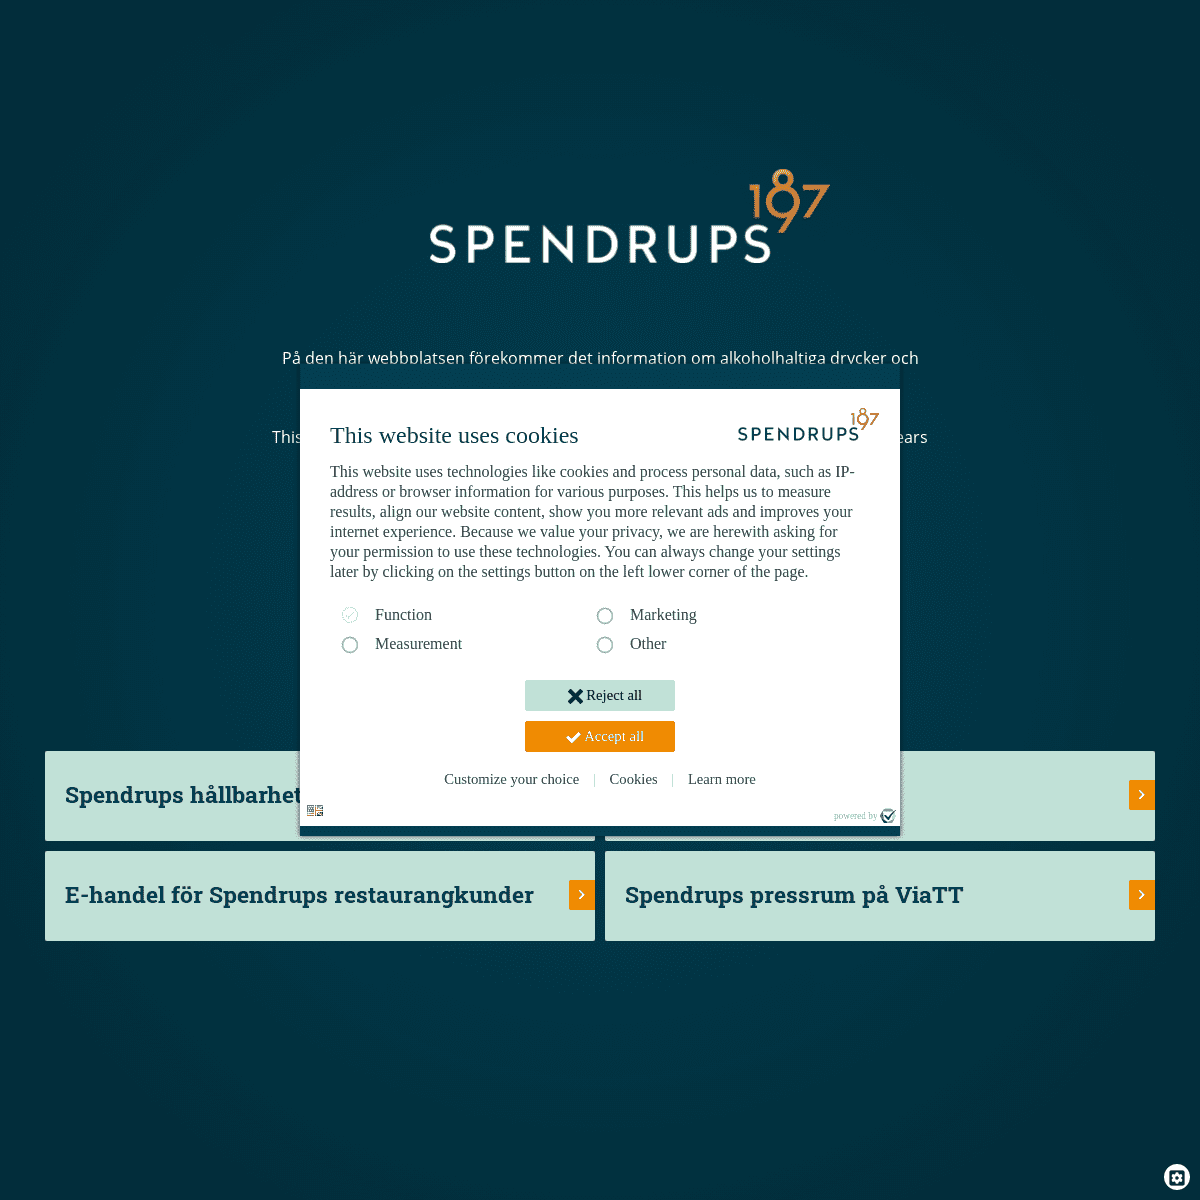 A complete backup of https://spendrups.se